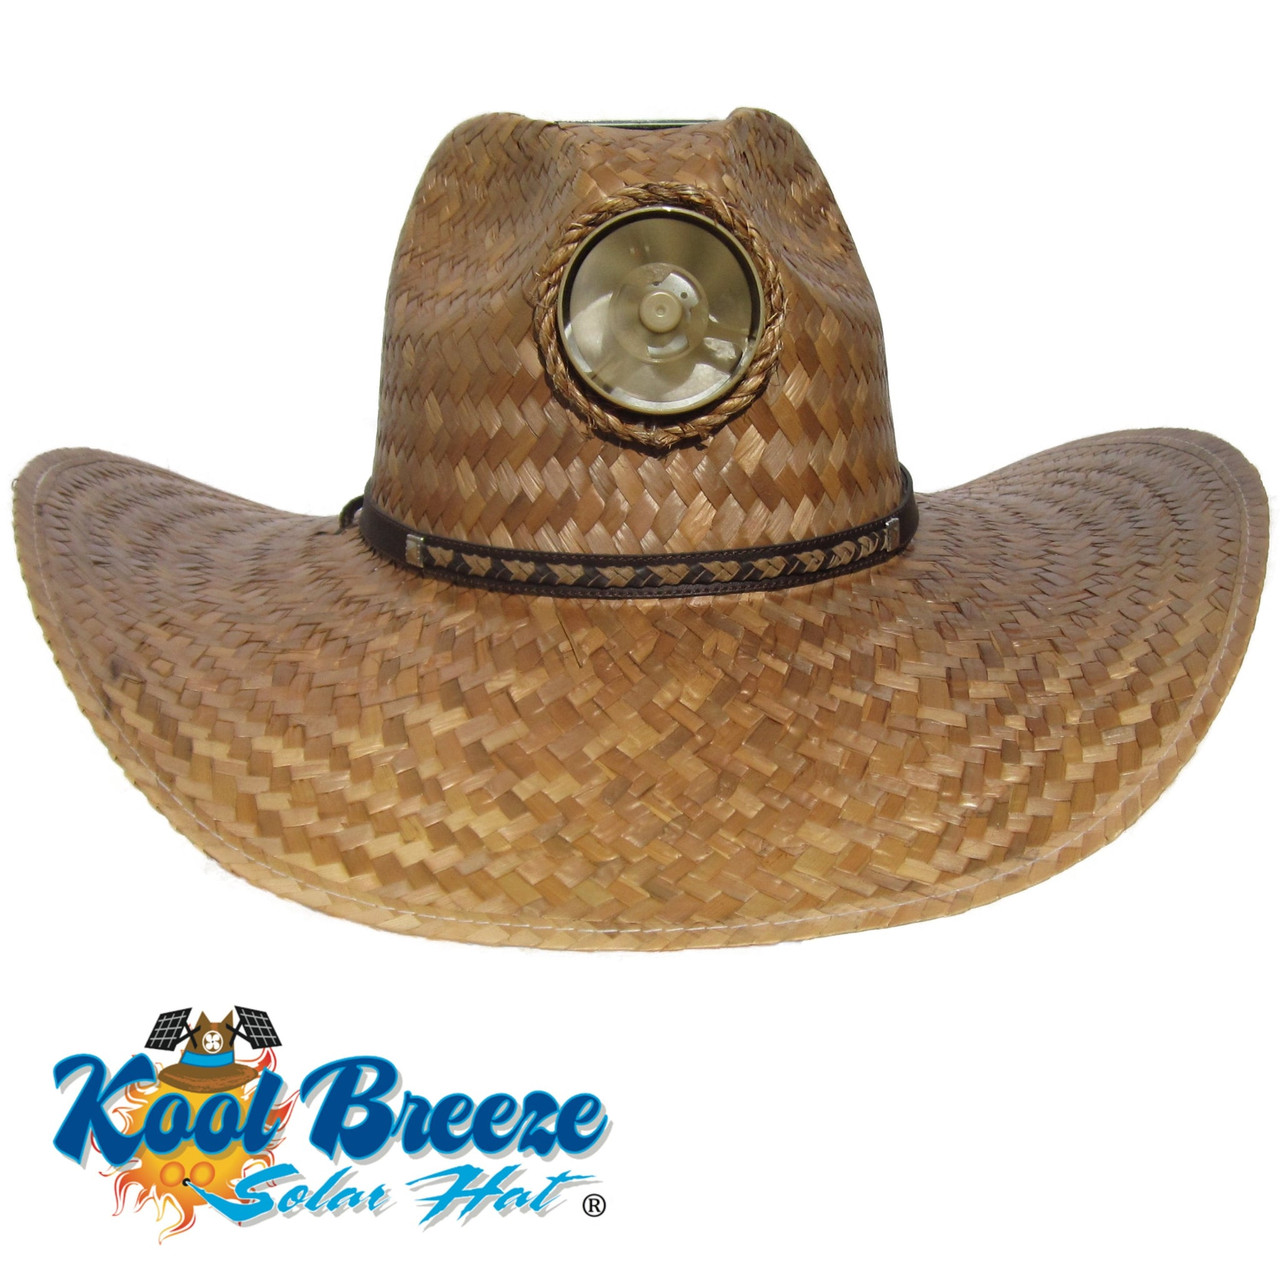 Kool Breeze Solar Hats Gentlemen's Solar Straw Hat w. Thin Band